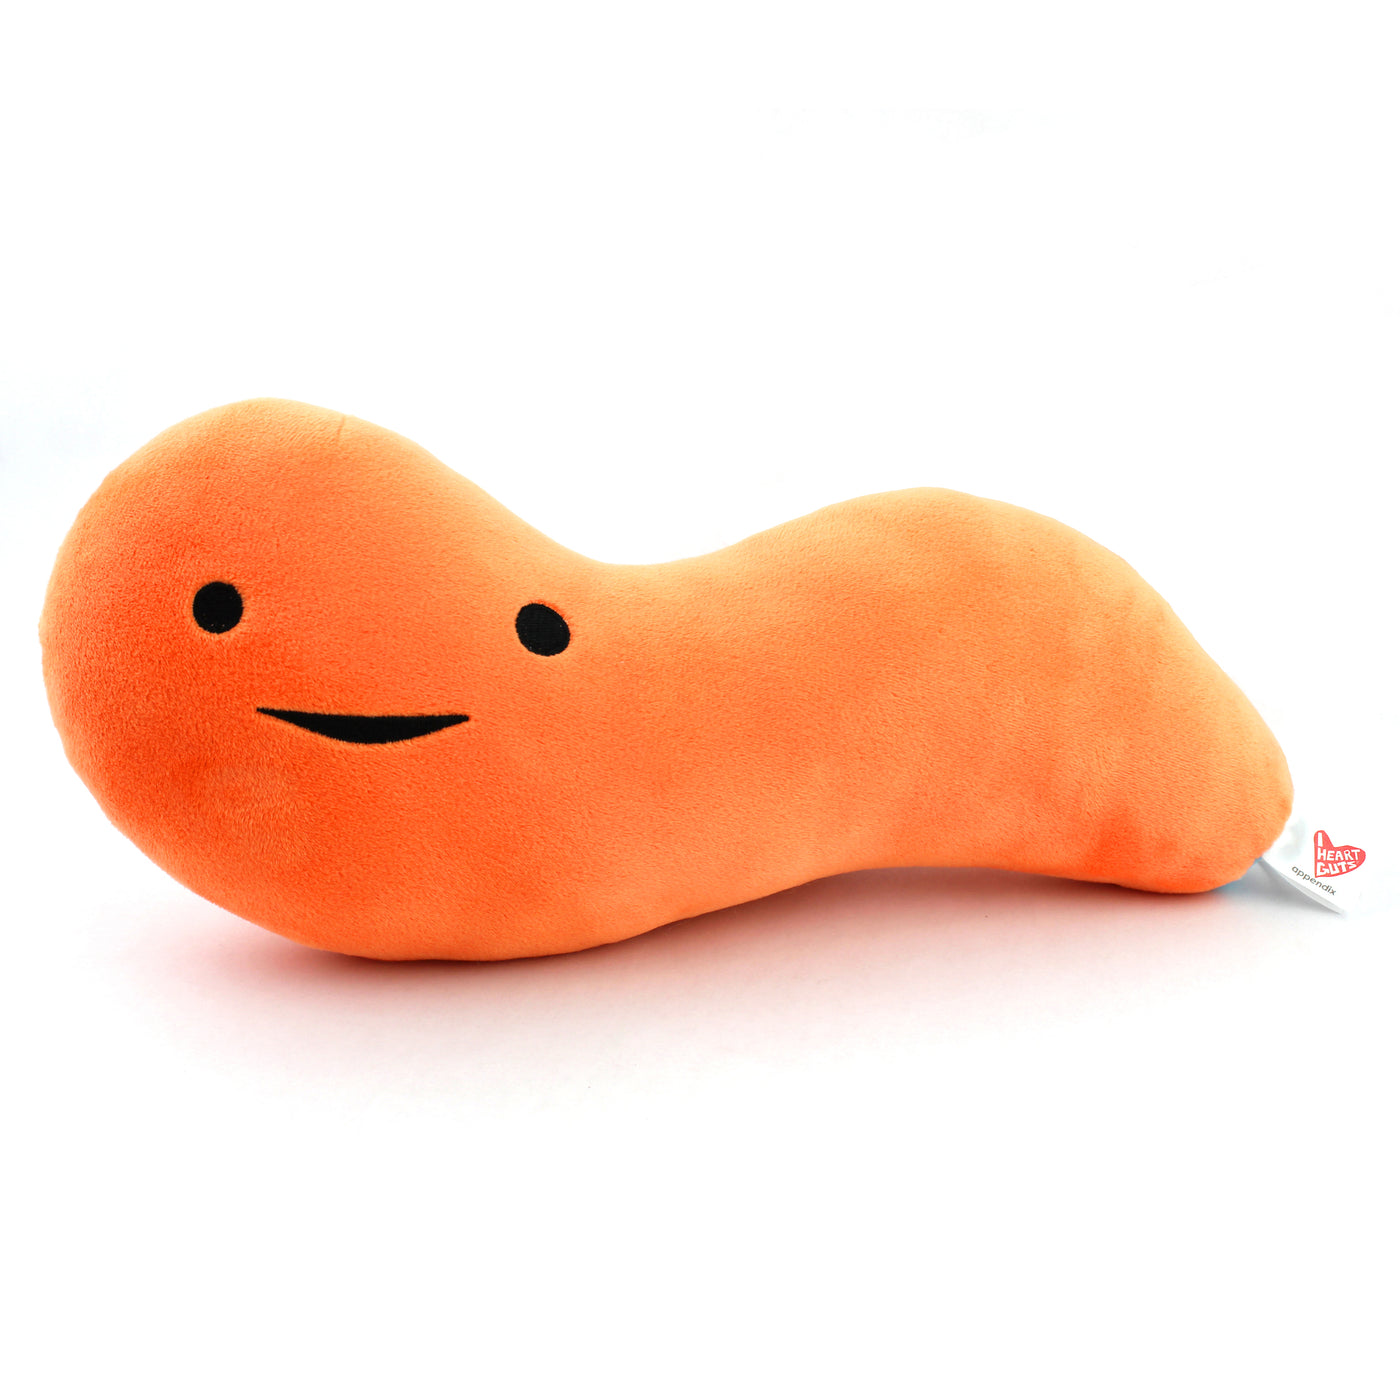 Appendix Plush - Appendix Plushie - Appendix Stuffed Animal - Appendix Shaped Pillow - Human Appendix Stuffed Toy - Appendix Gifts